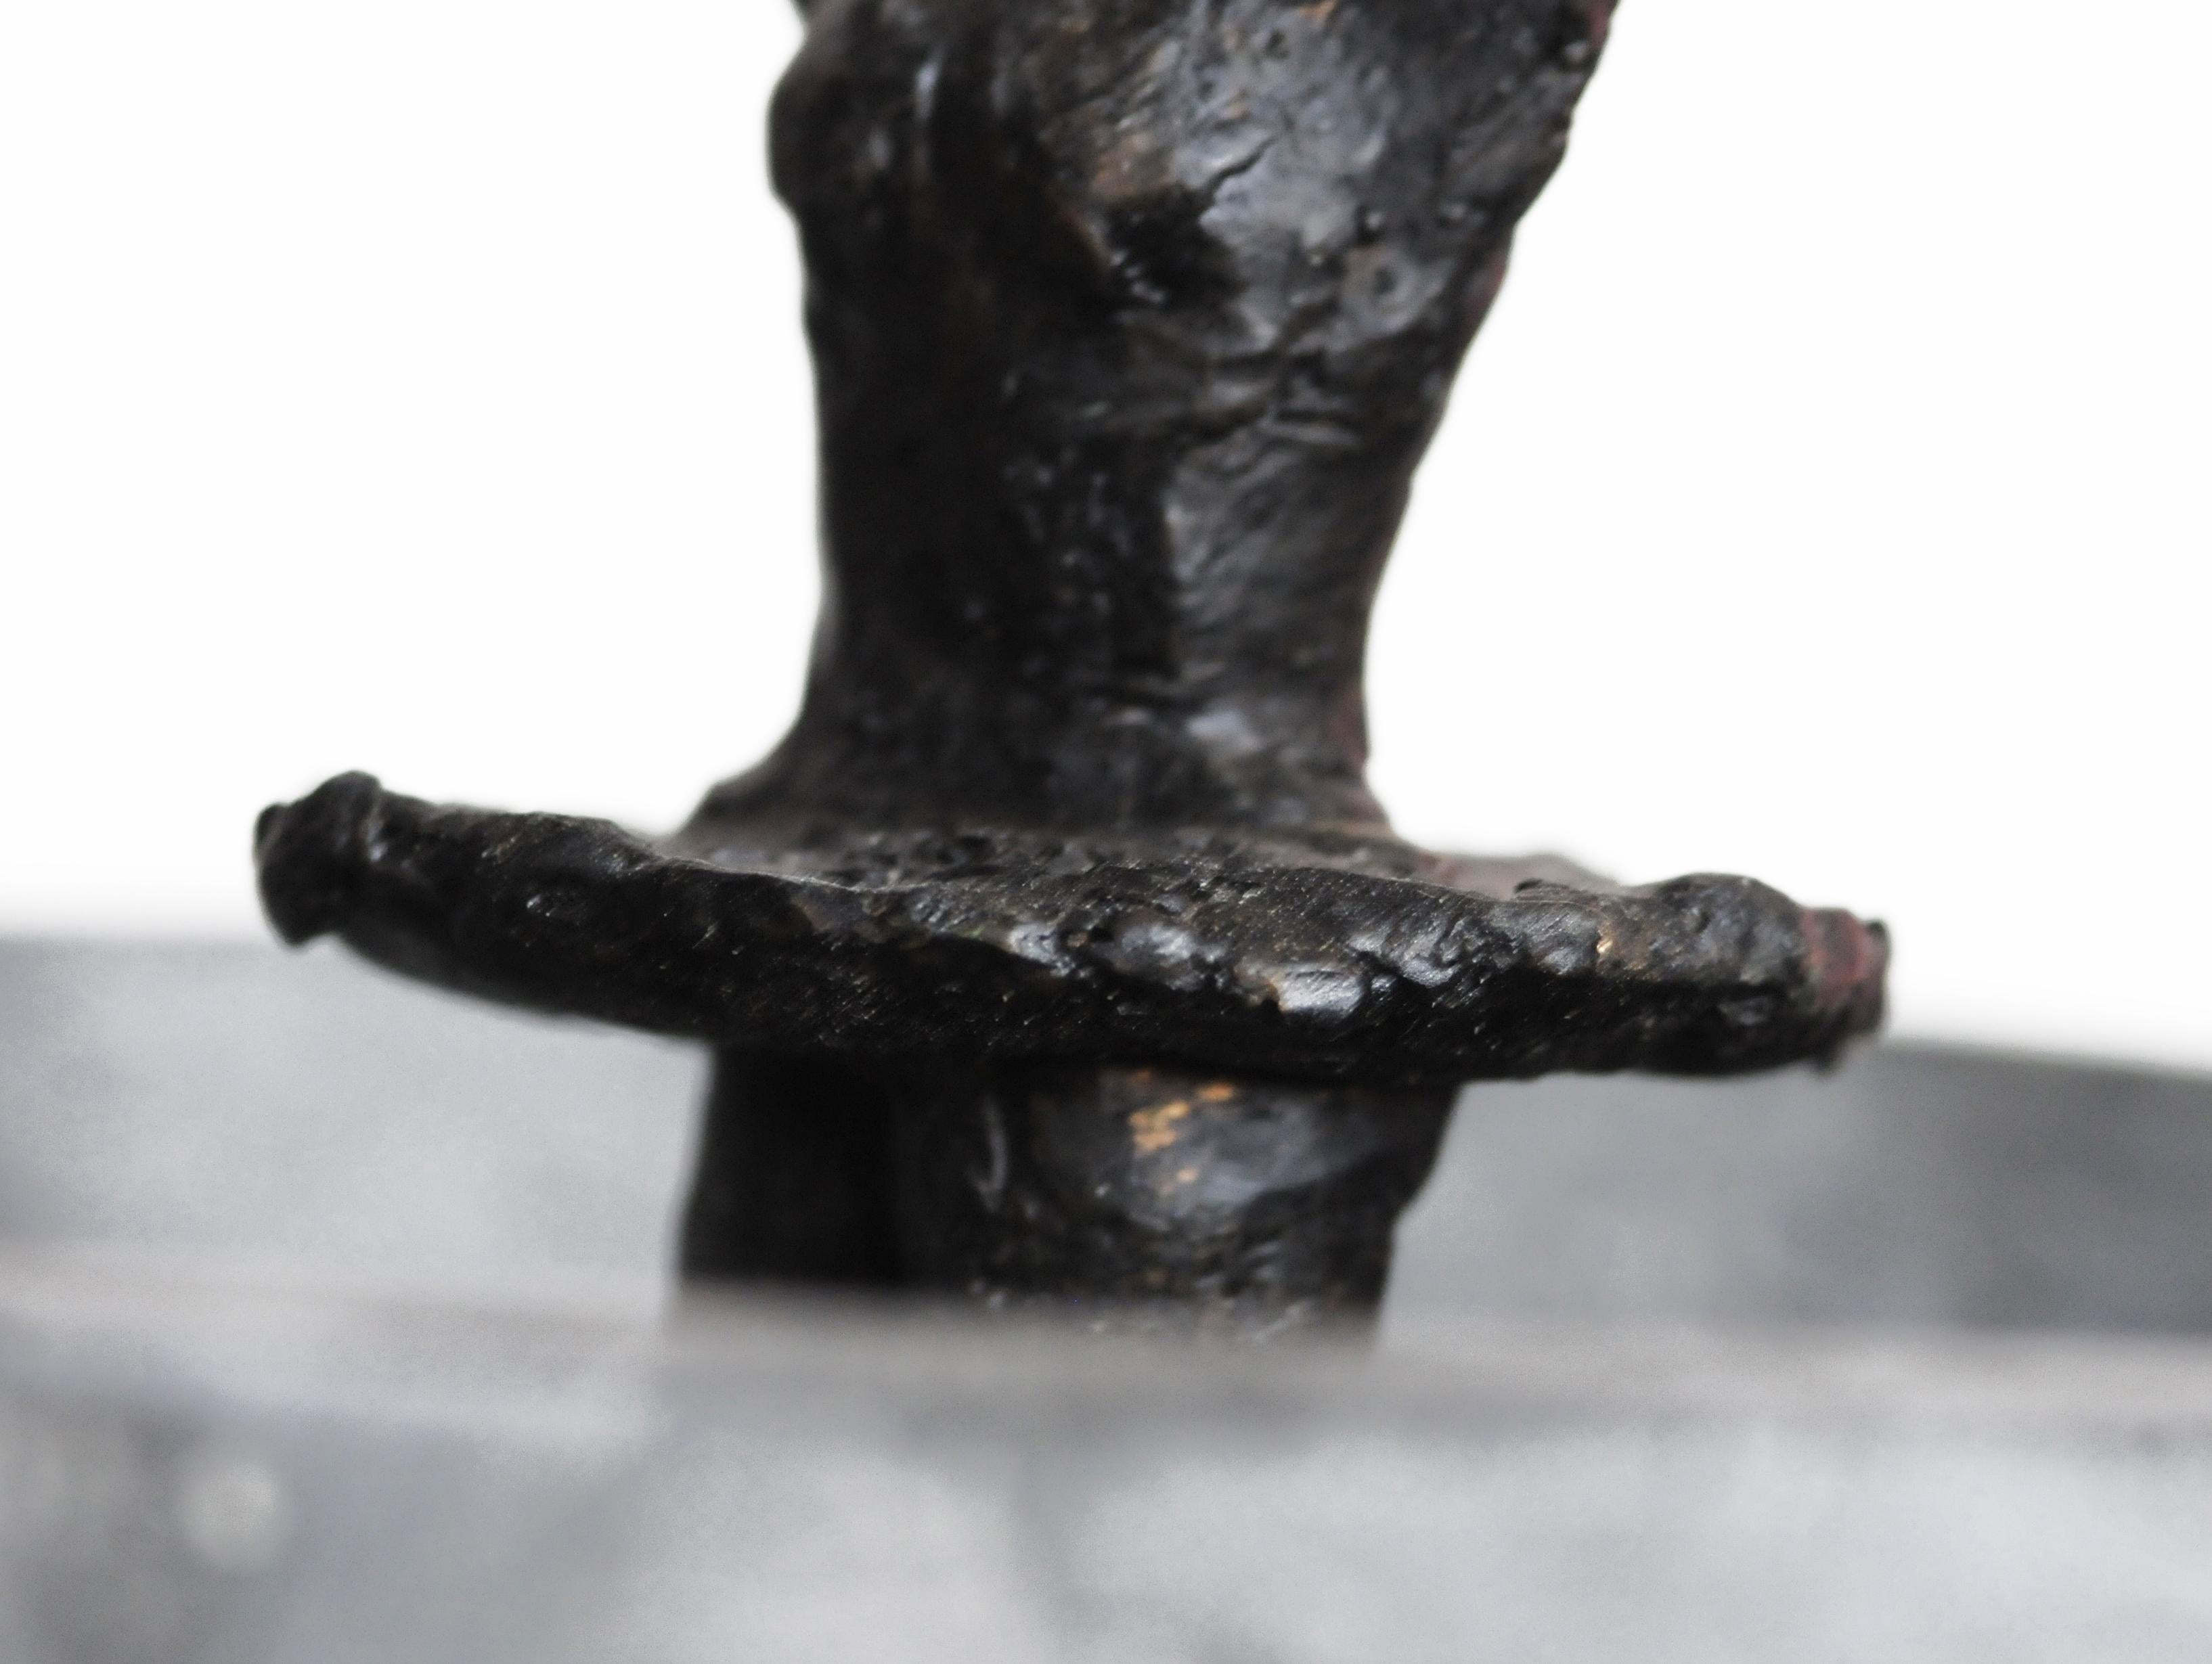 Epoxy Resin 'Birth of Venus Williams' Cast Bronze Sculpture by David Bender For Sale